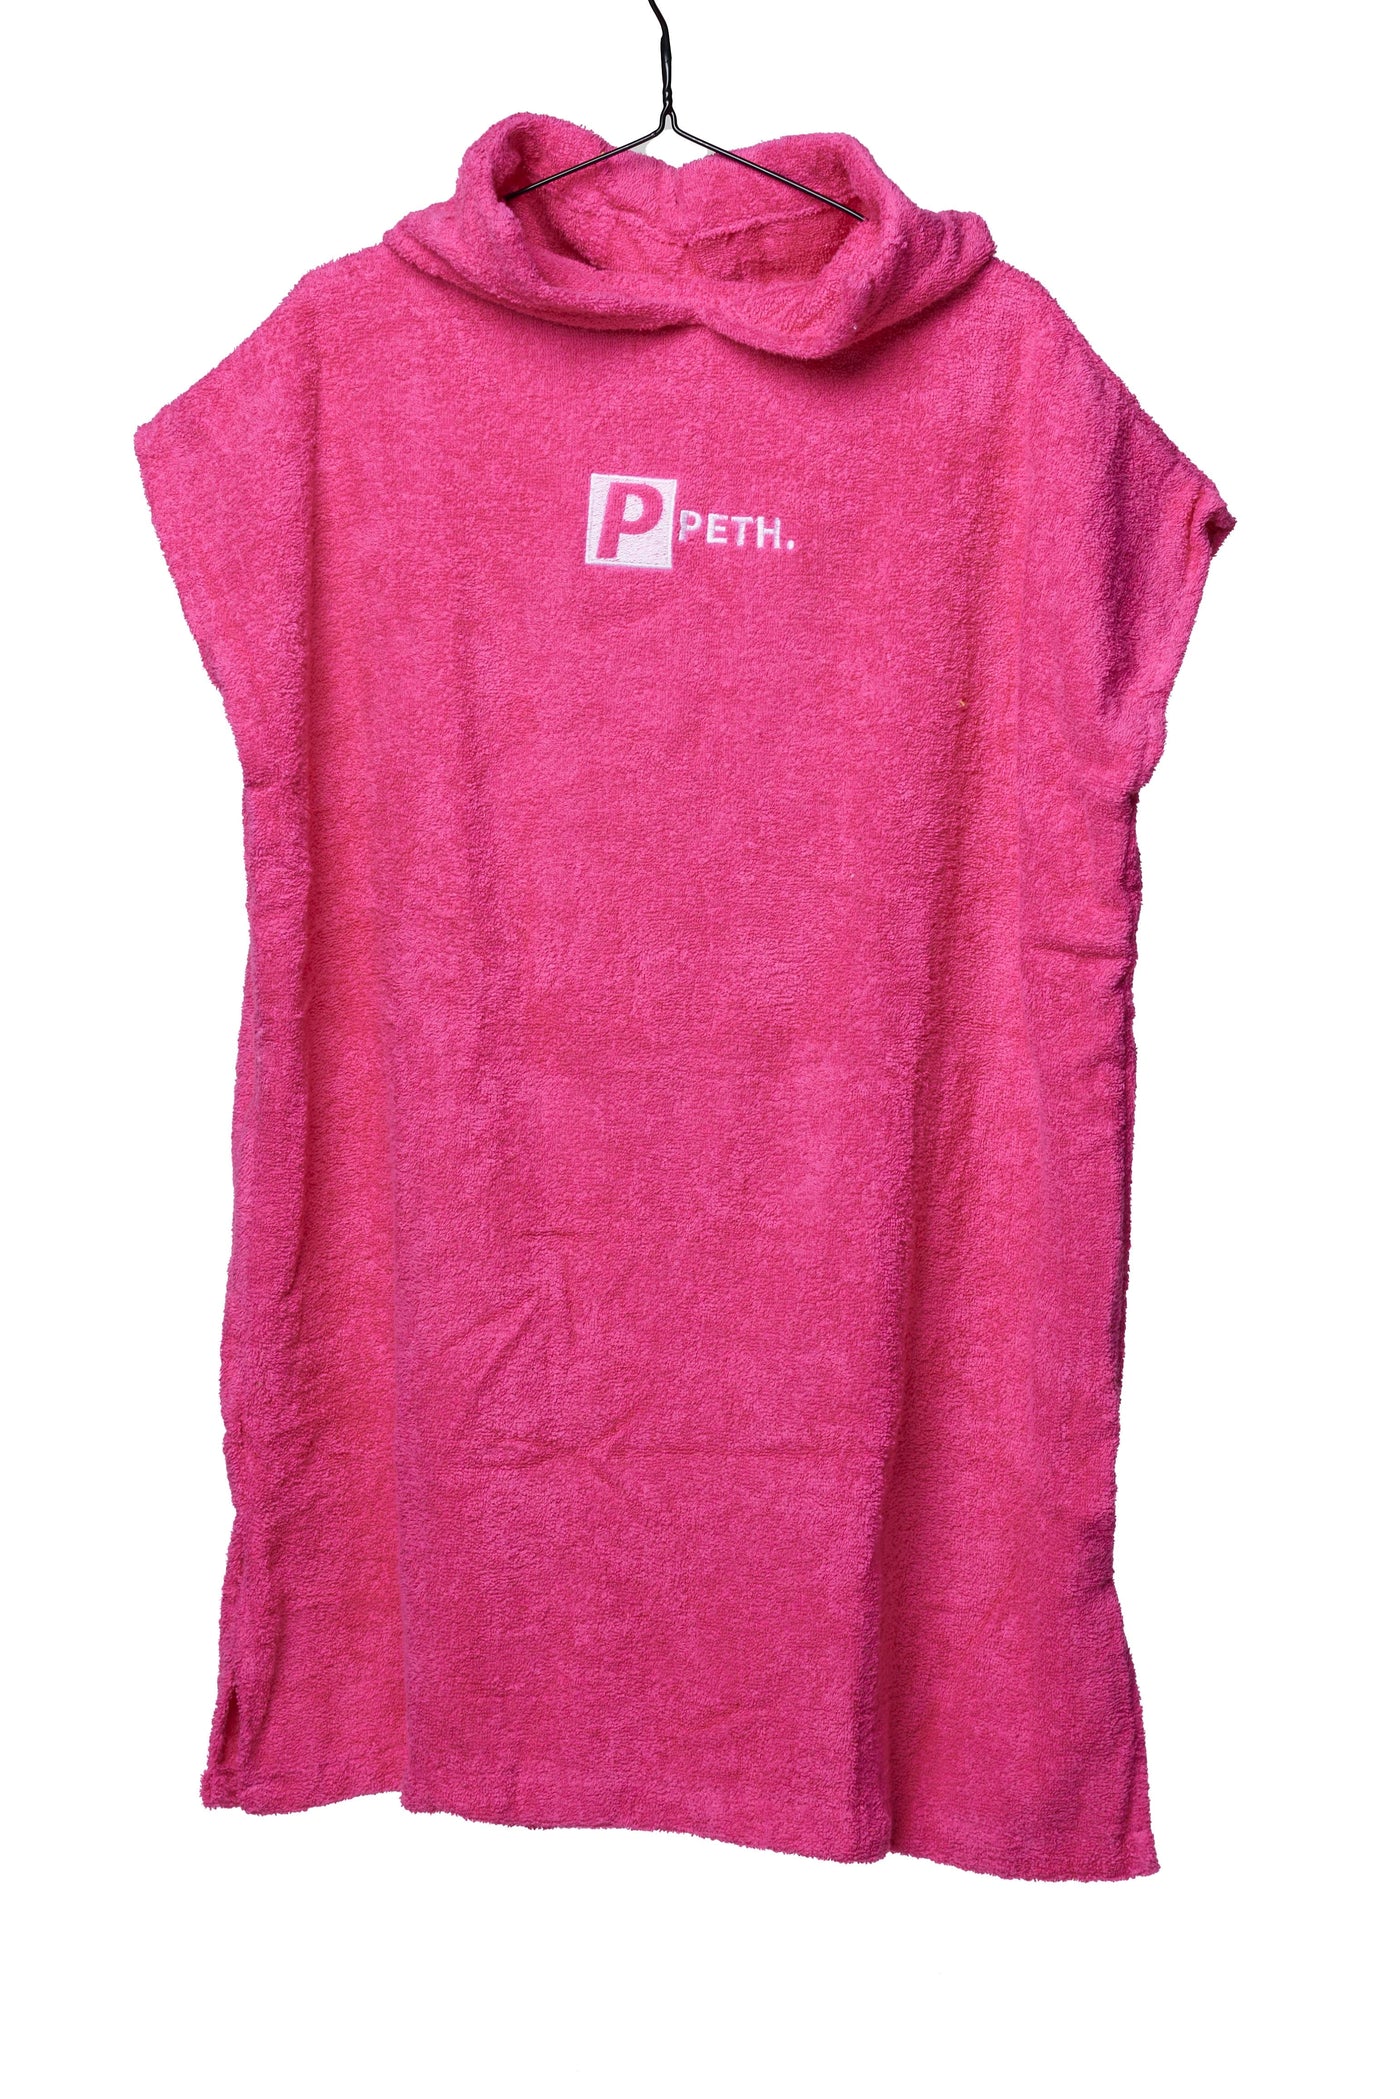 Premium Hot Pink Children’s Cotton Towel Changing Robe - Poncho